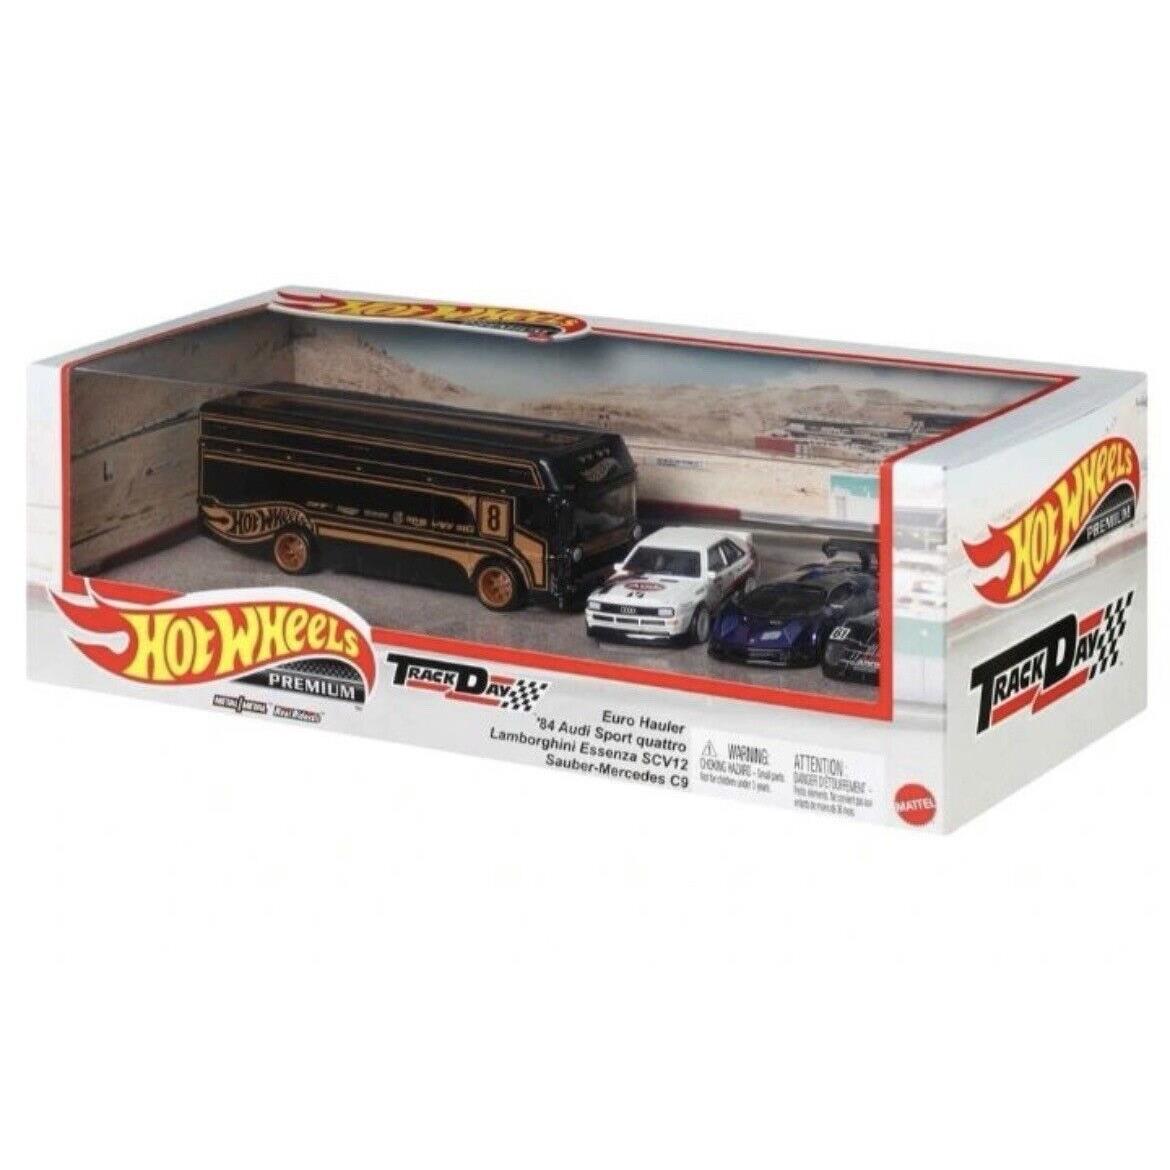 Hot Wheels Premium Track Day Diorama Collectors Box Set - Black